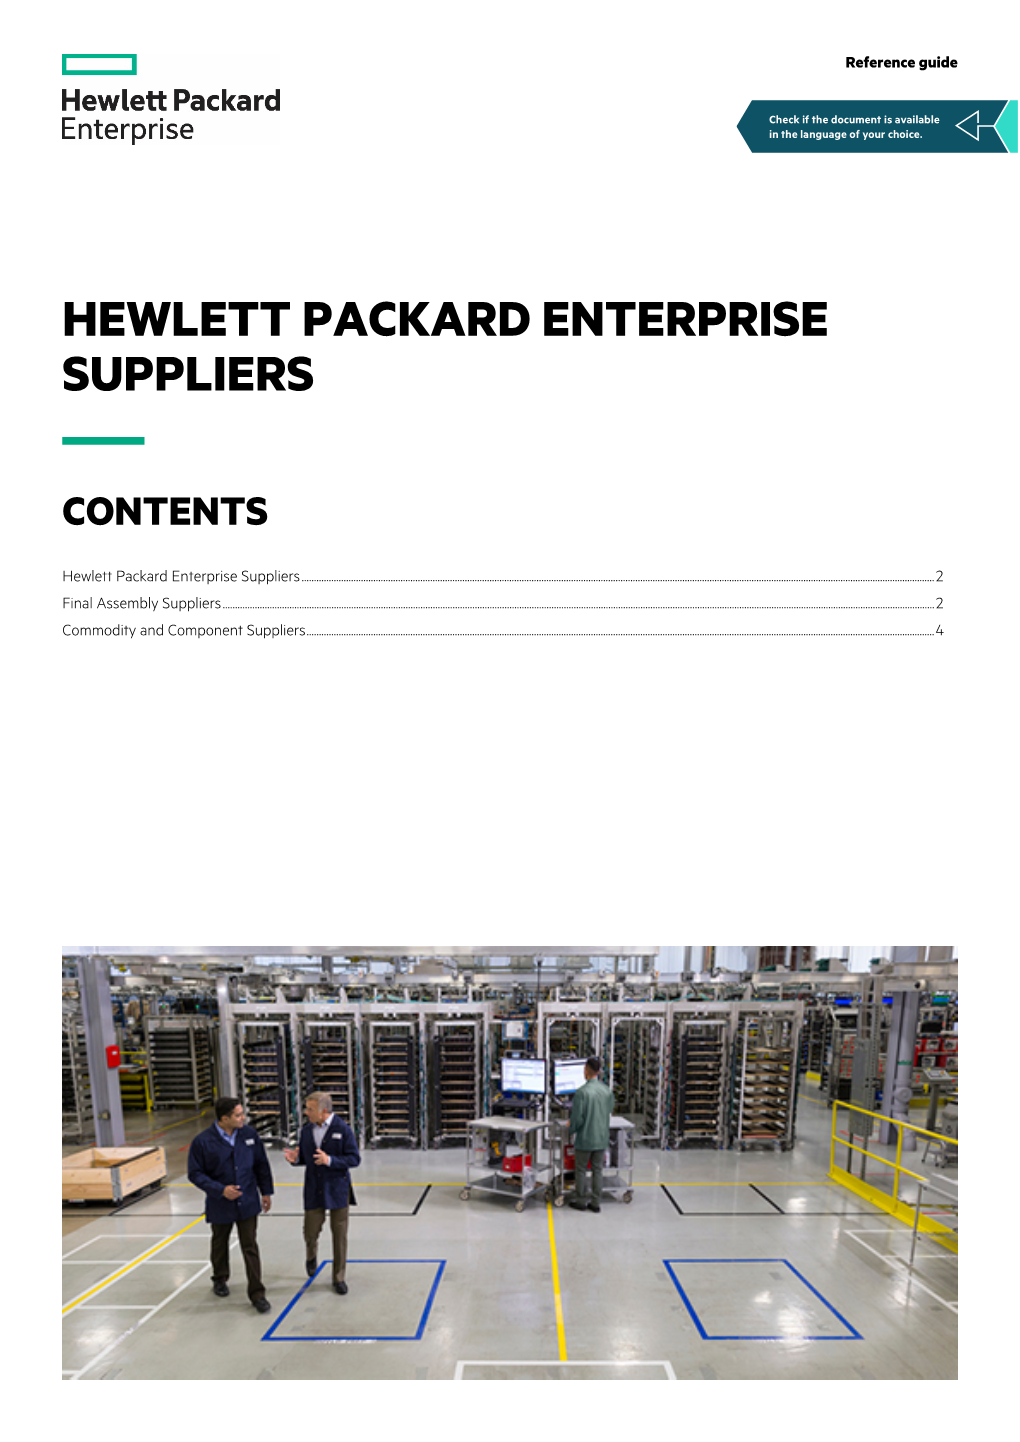 Hewlett Packard Enterprise Suppliers Reference Guide